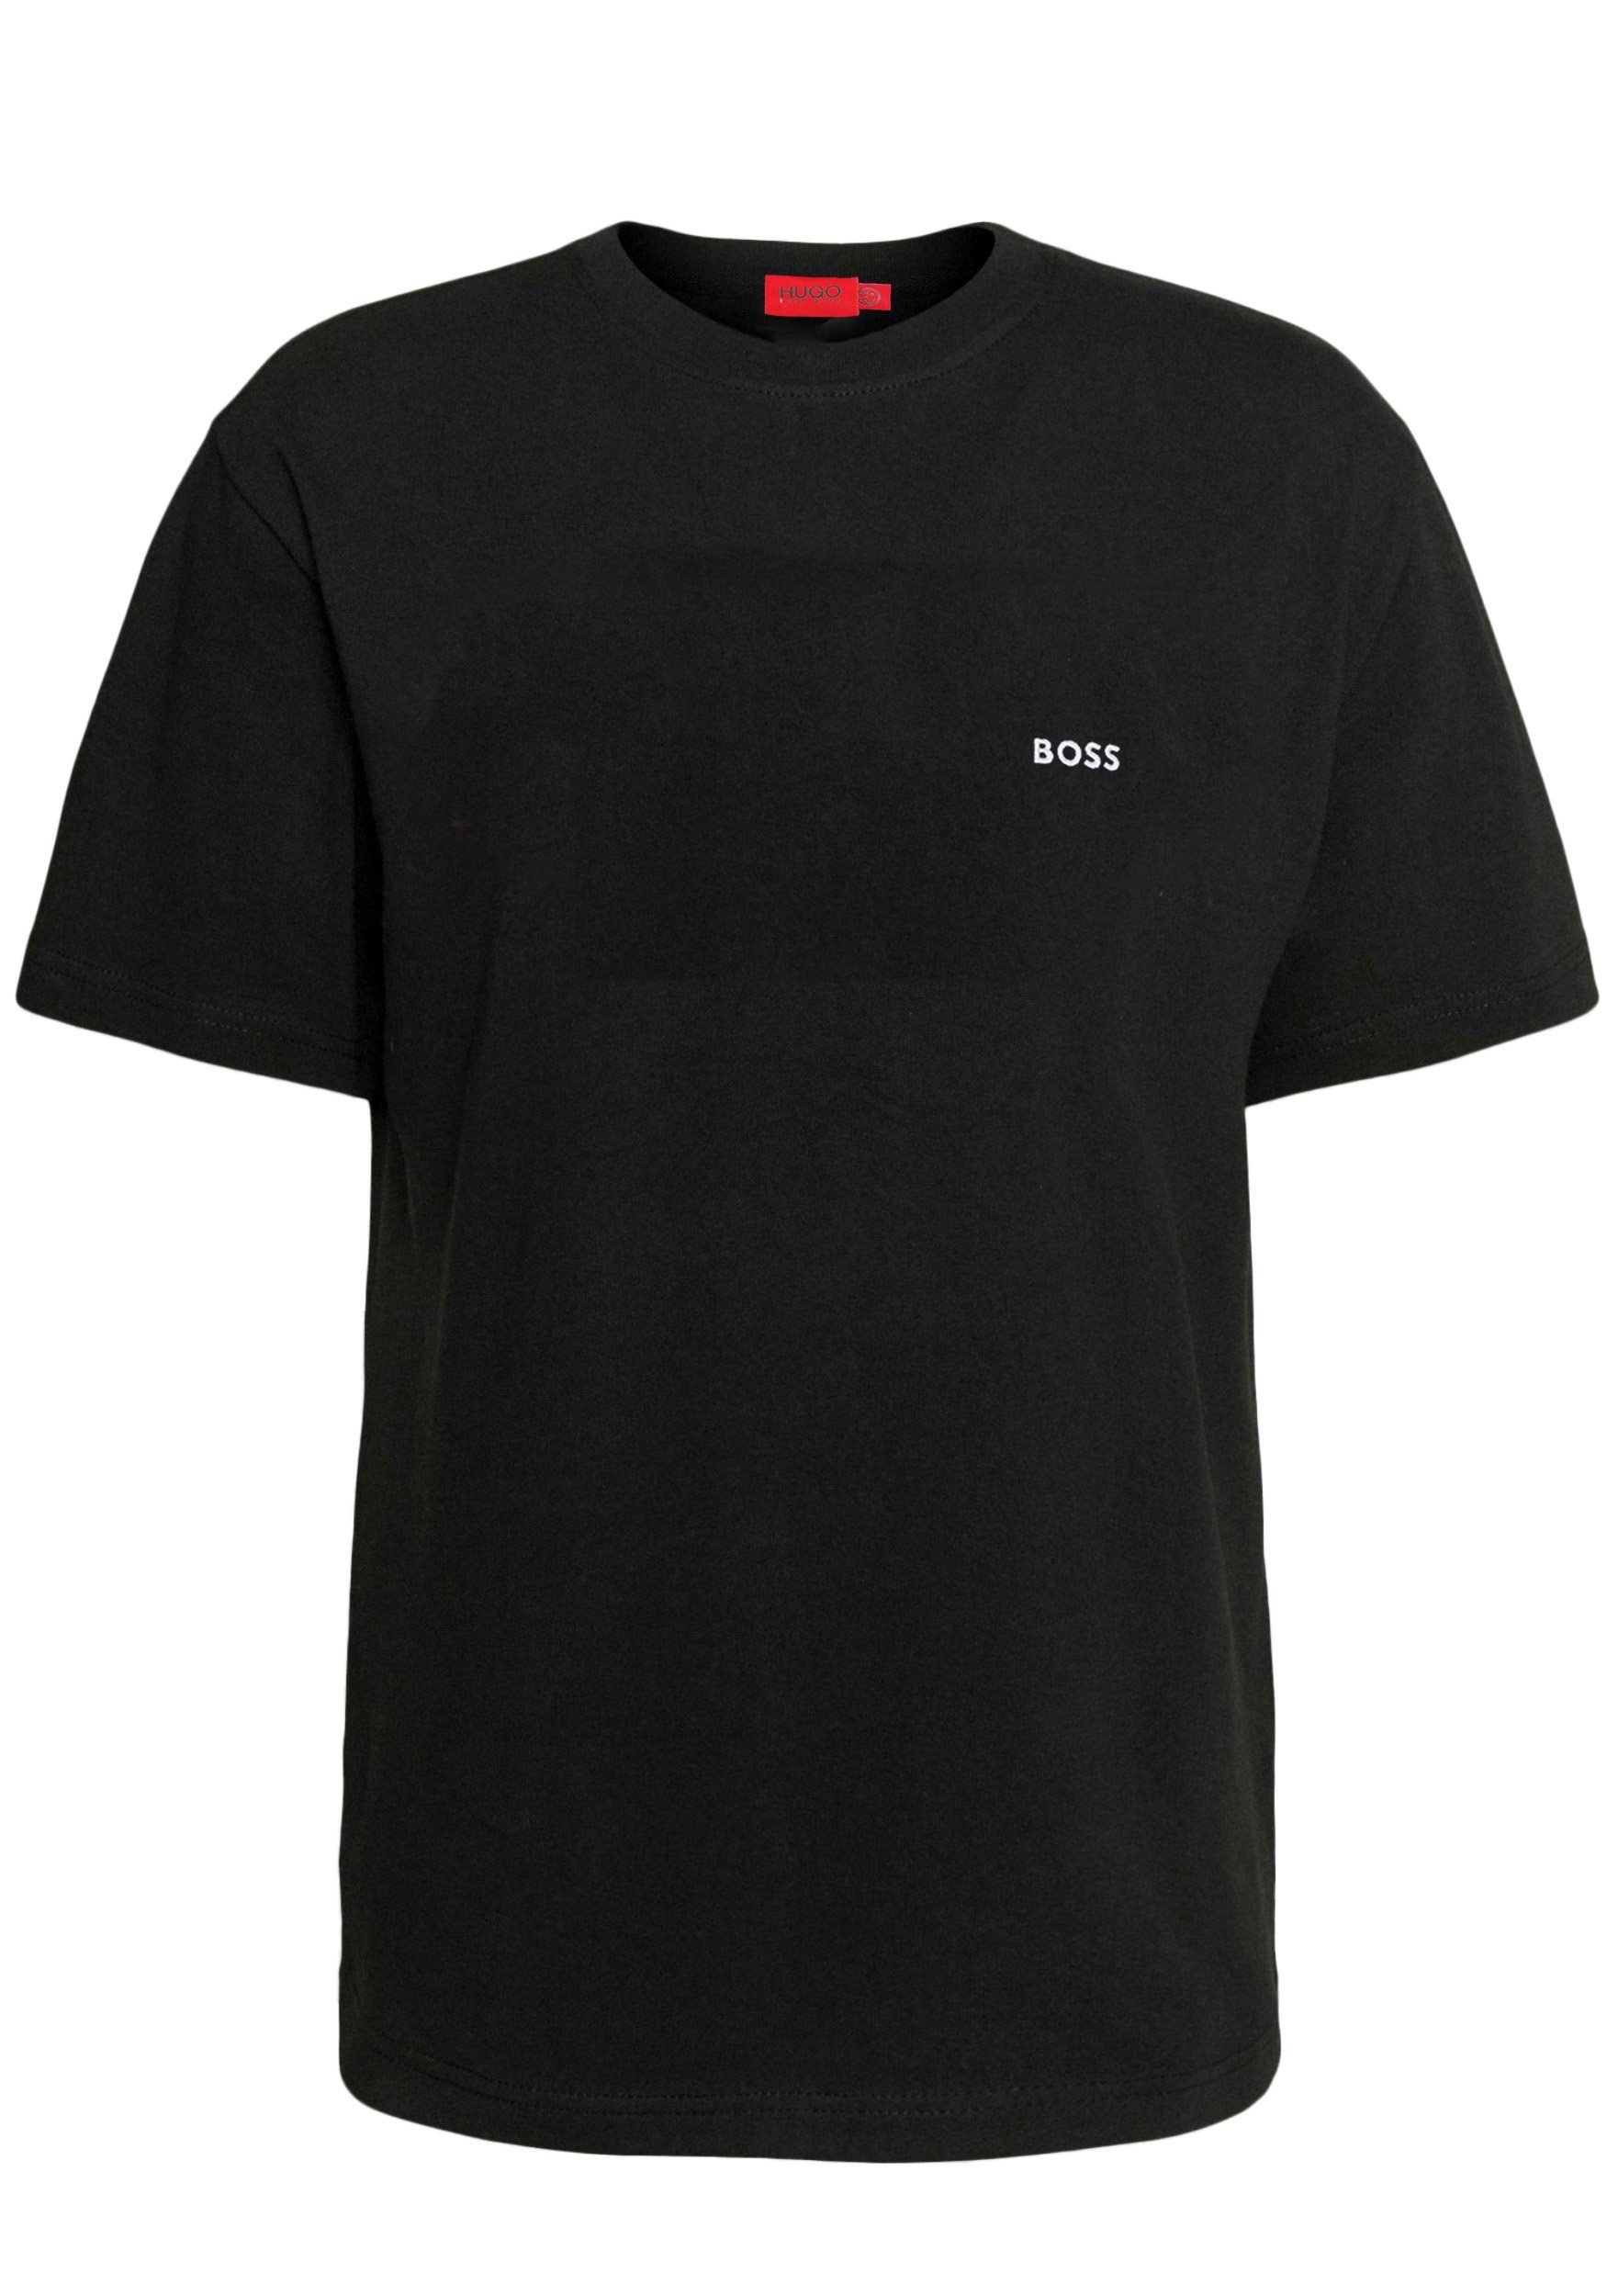 BOSS T-Shirt Hugo Boss auf der Brust mit Big Size Logo Print